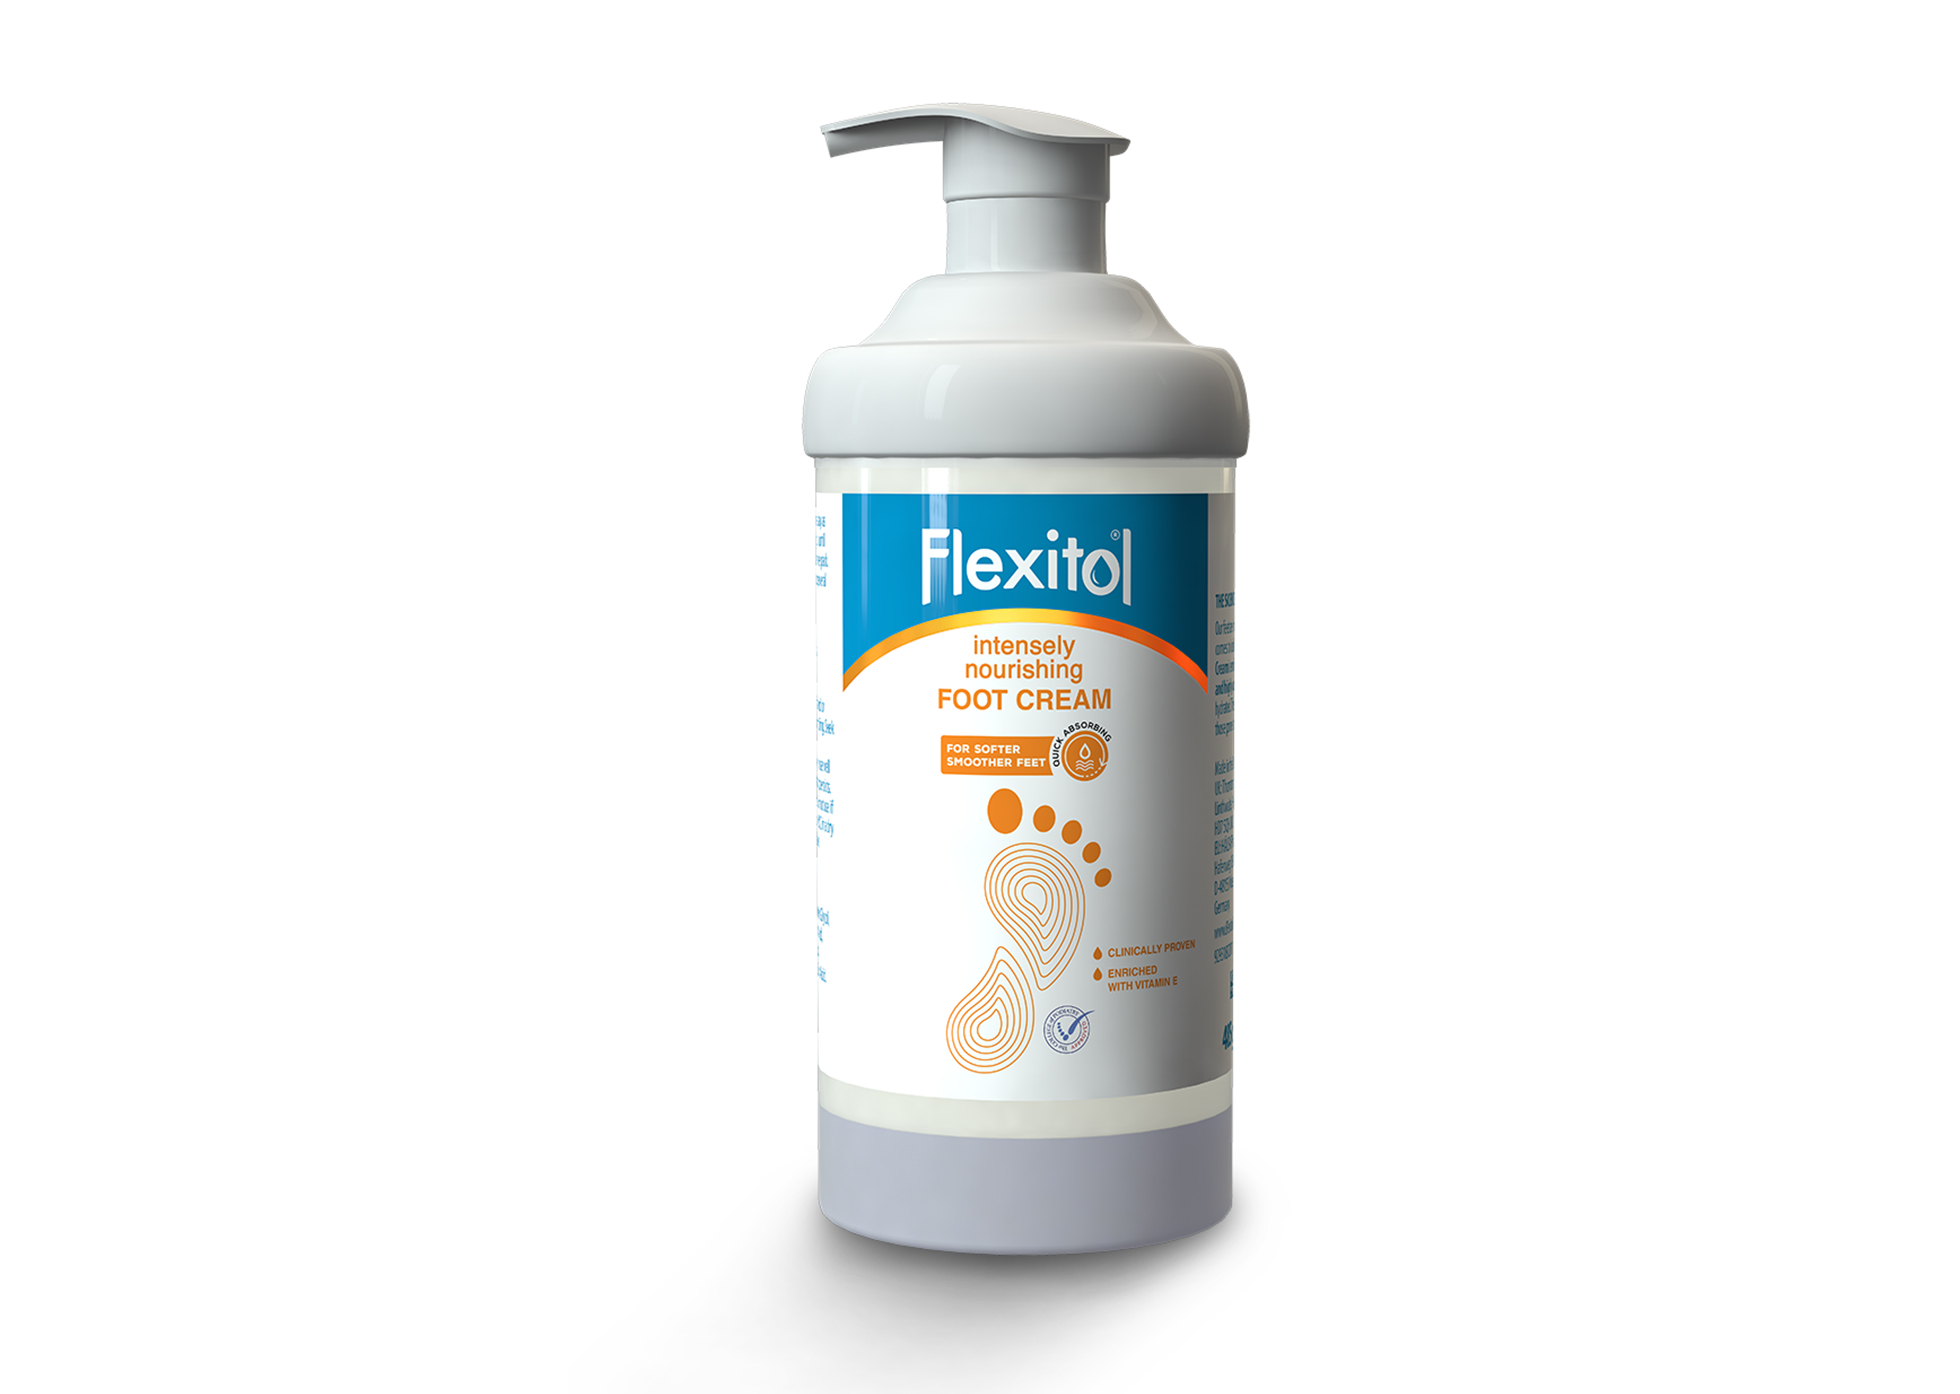 Flexitol Products - Moisturising Cream - 500g